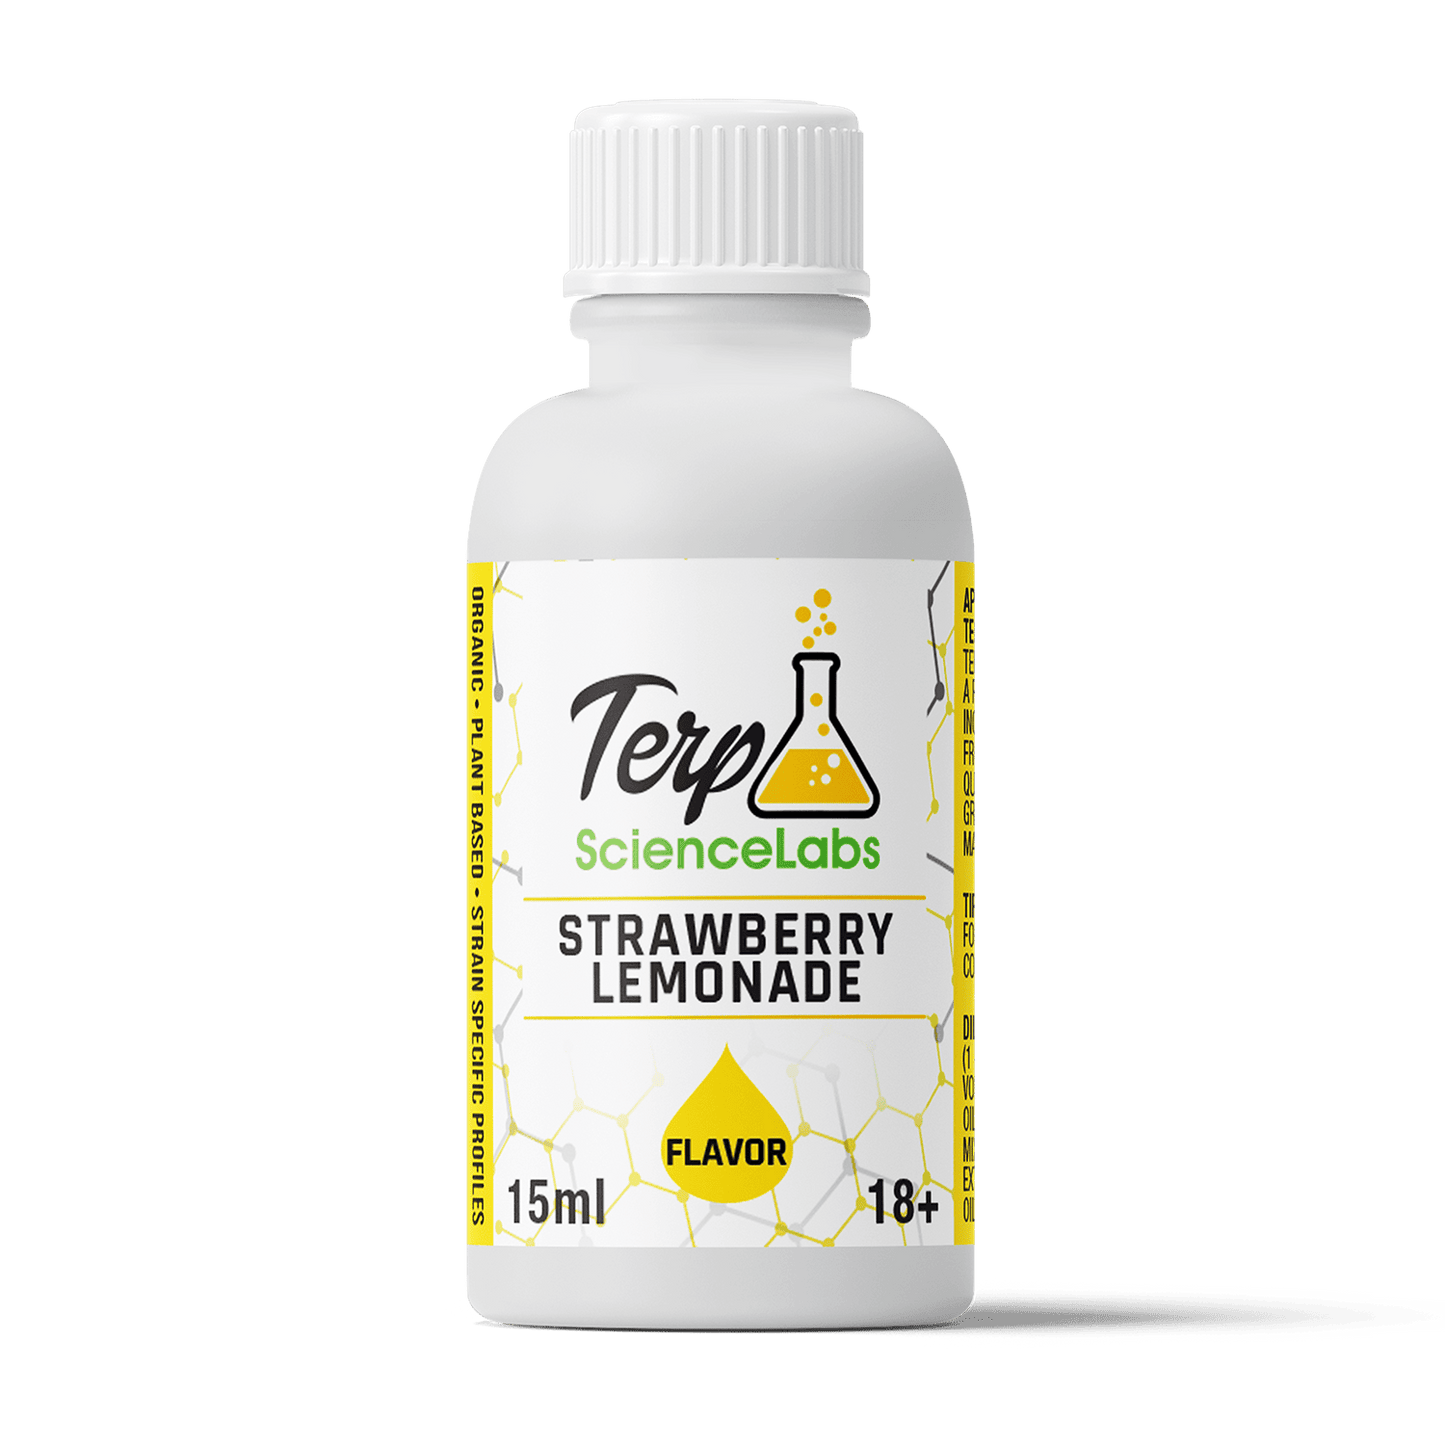 Strawberry Lemonade Flavor Profile